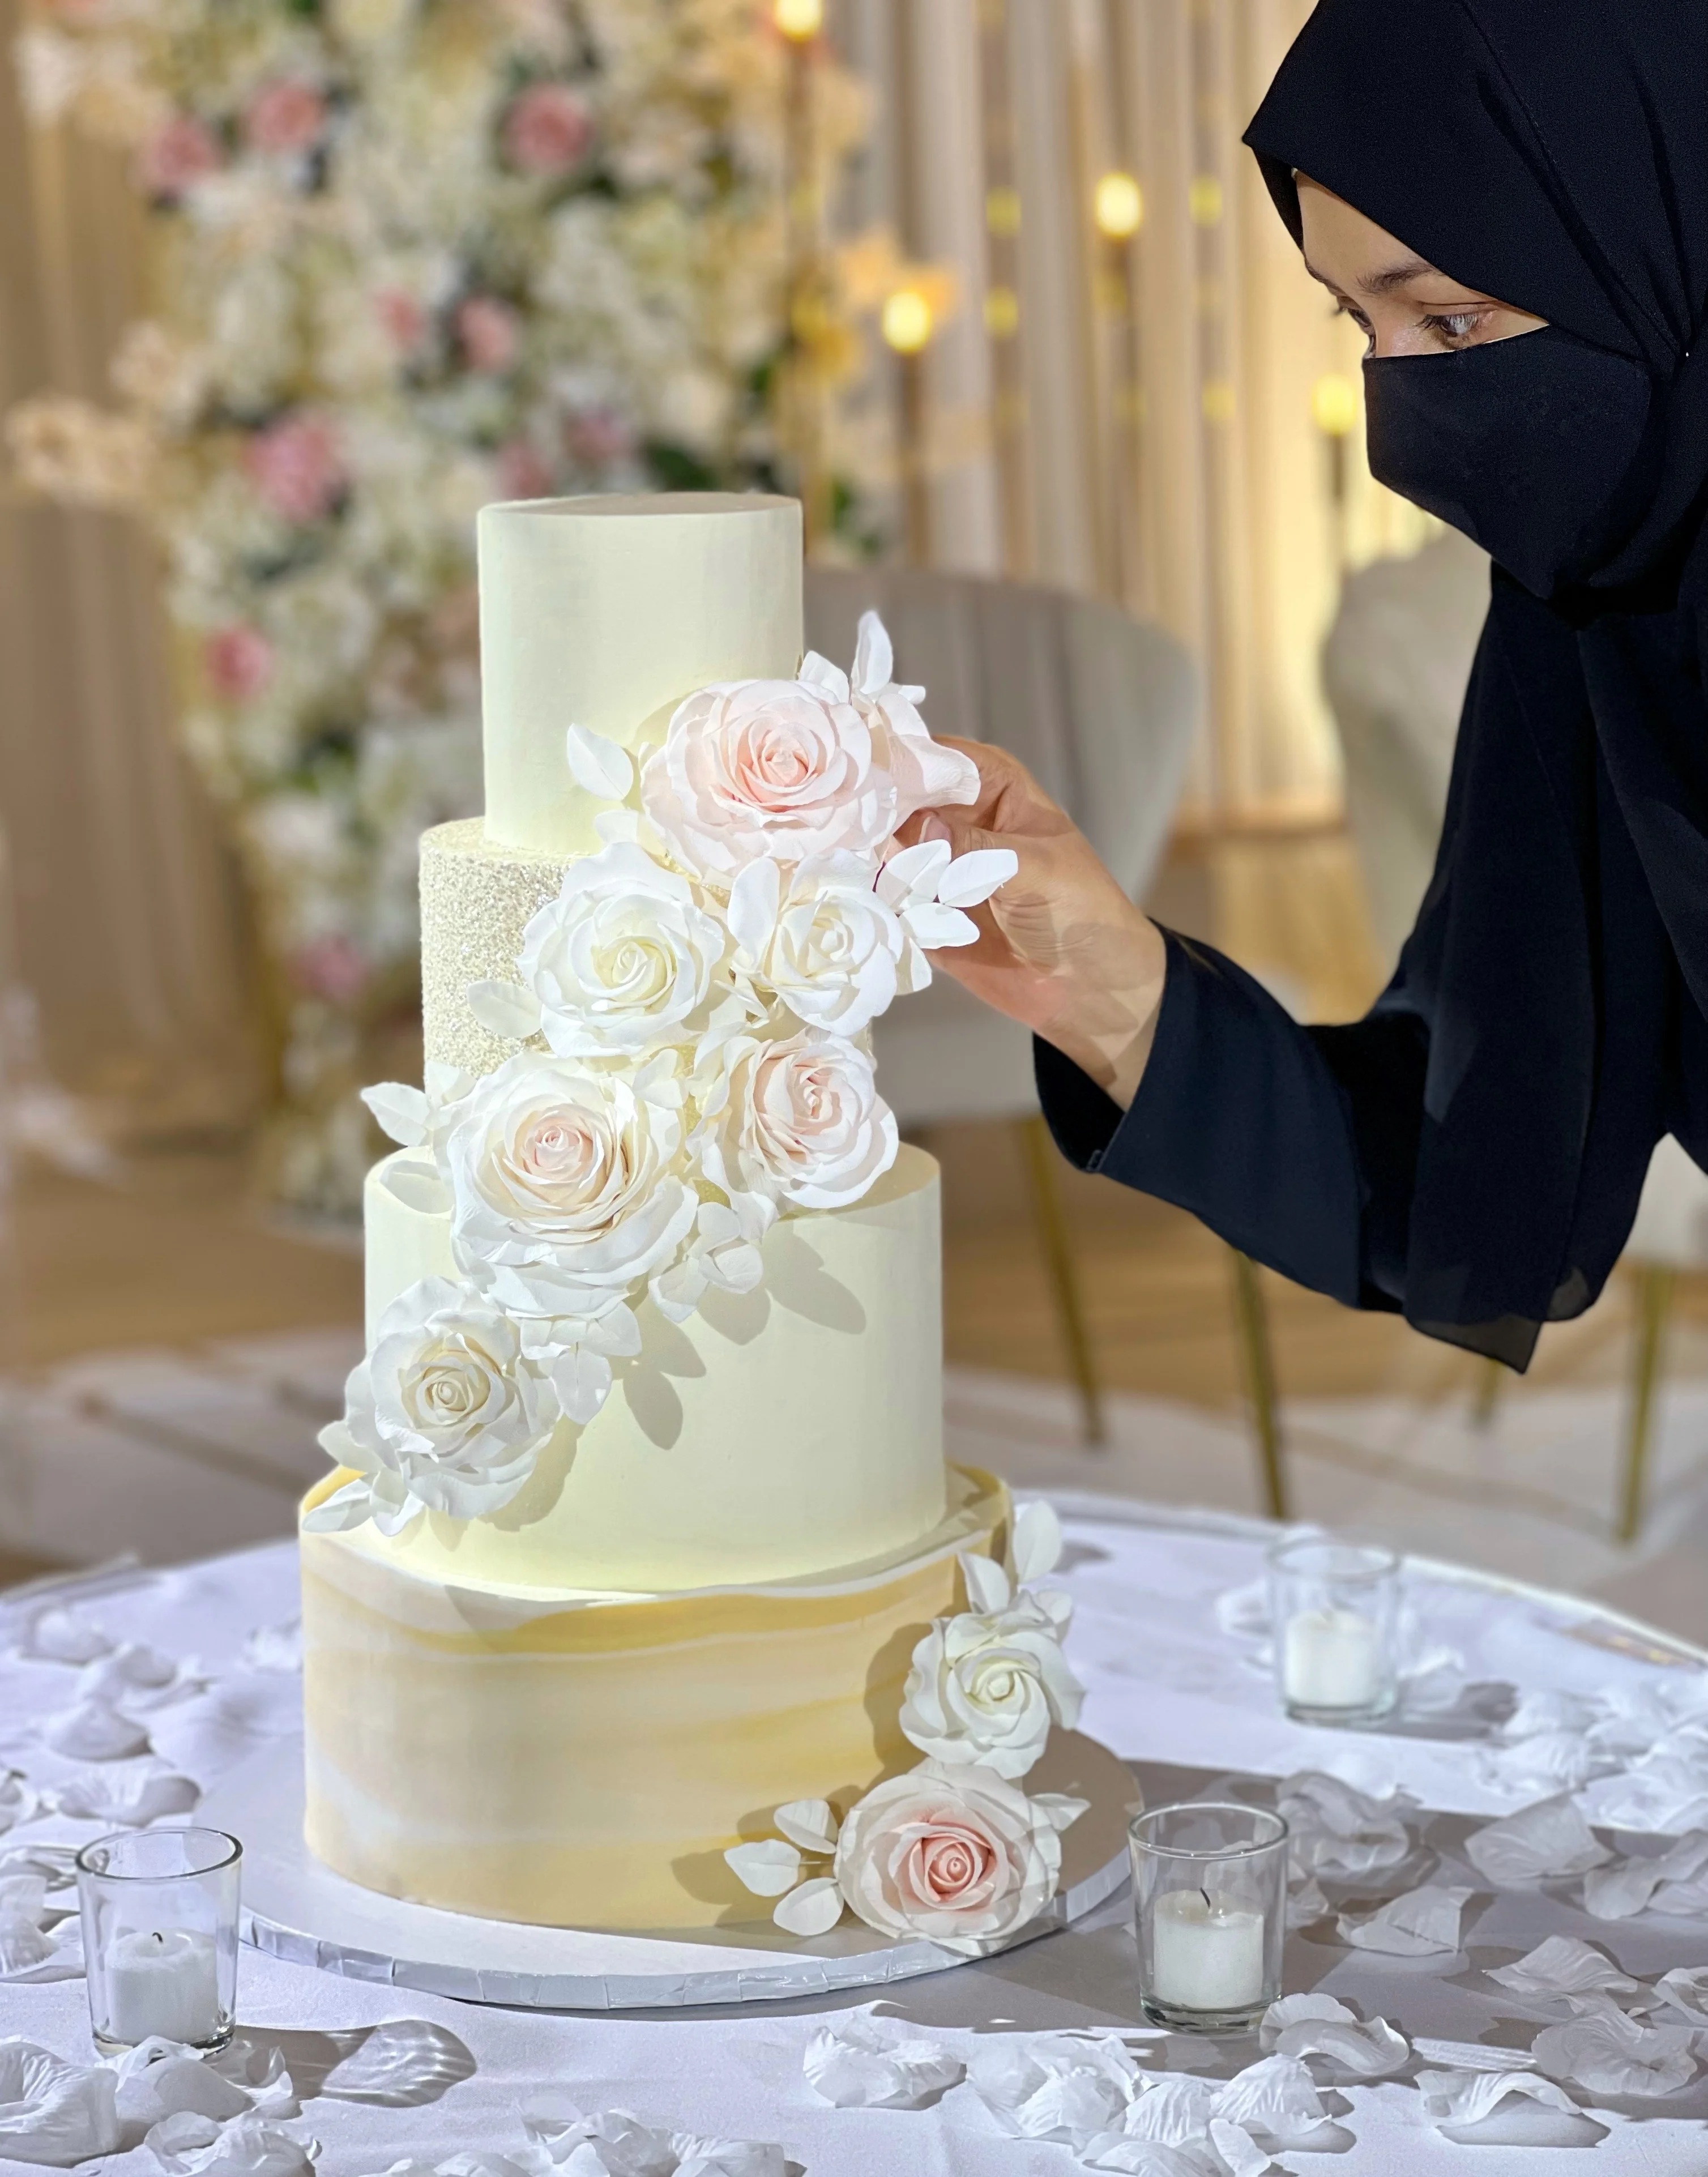 Blissful Crumbs cake designer assembling 4 tier wedding cake with handmade roses